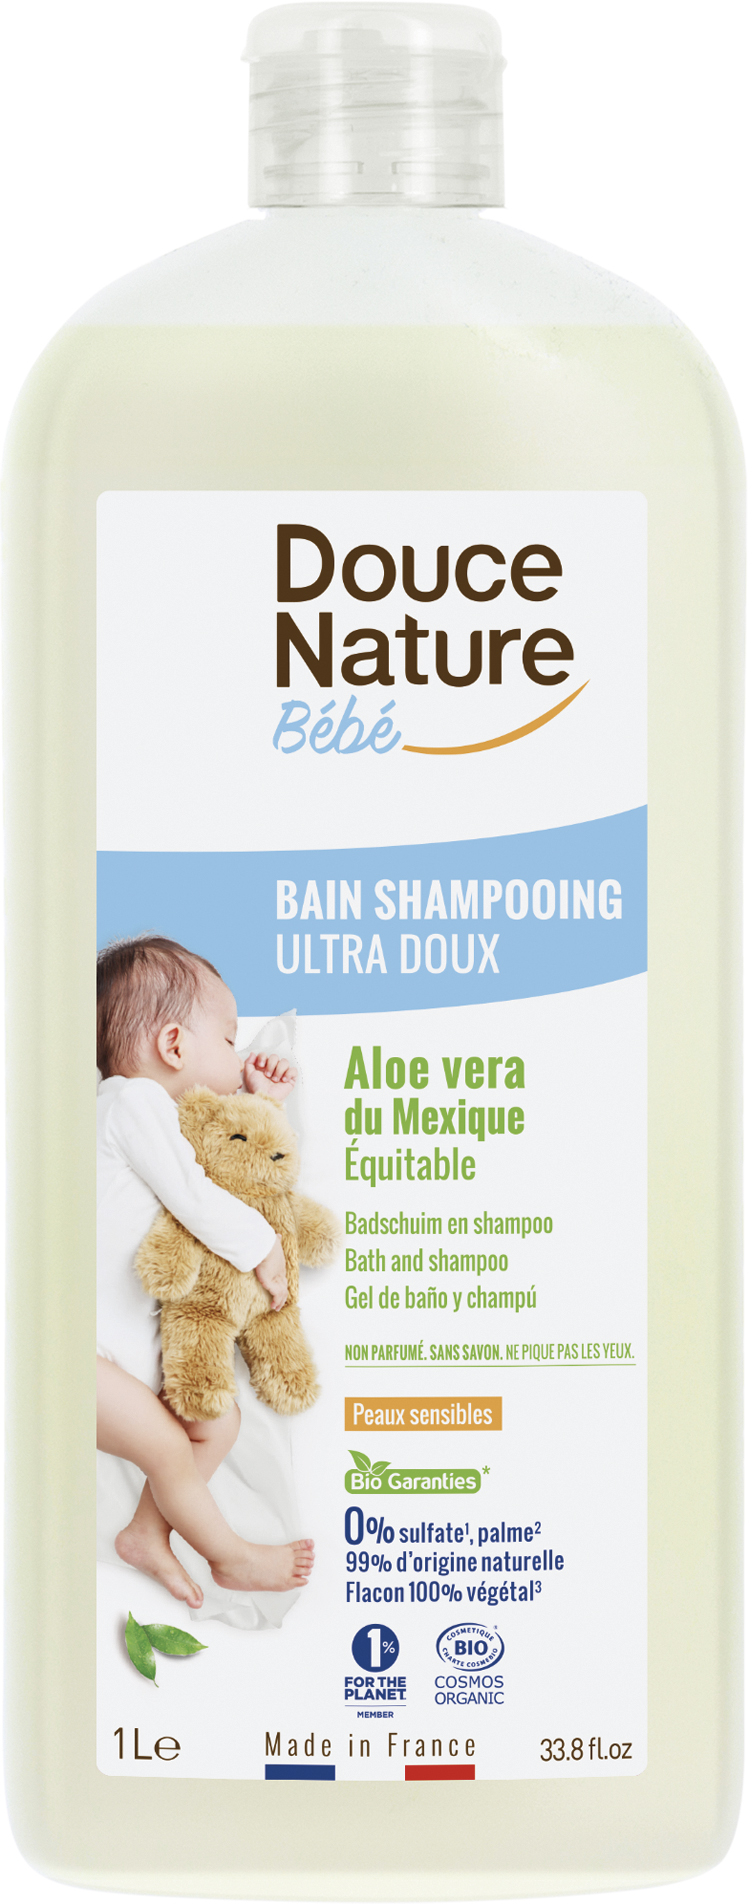 Bébé - Shampooing